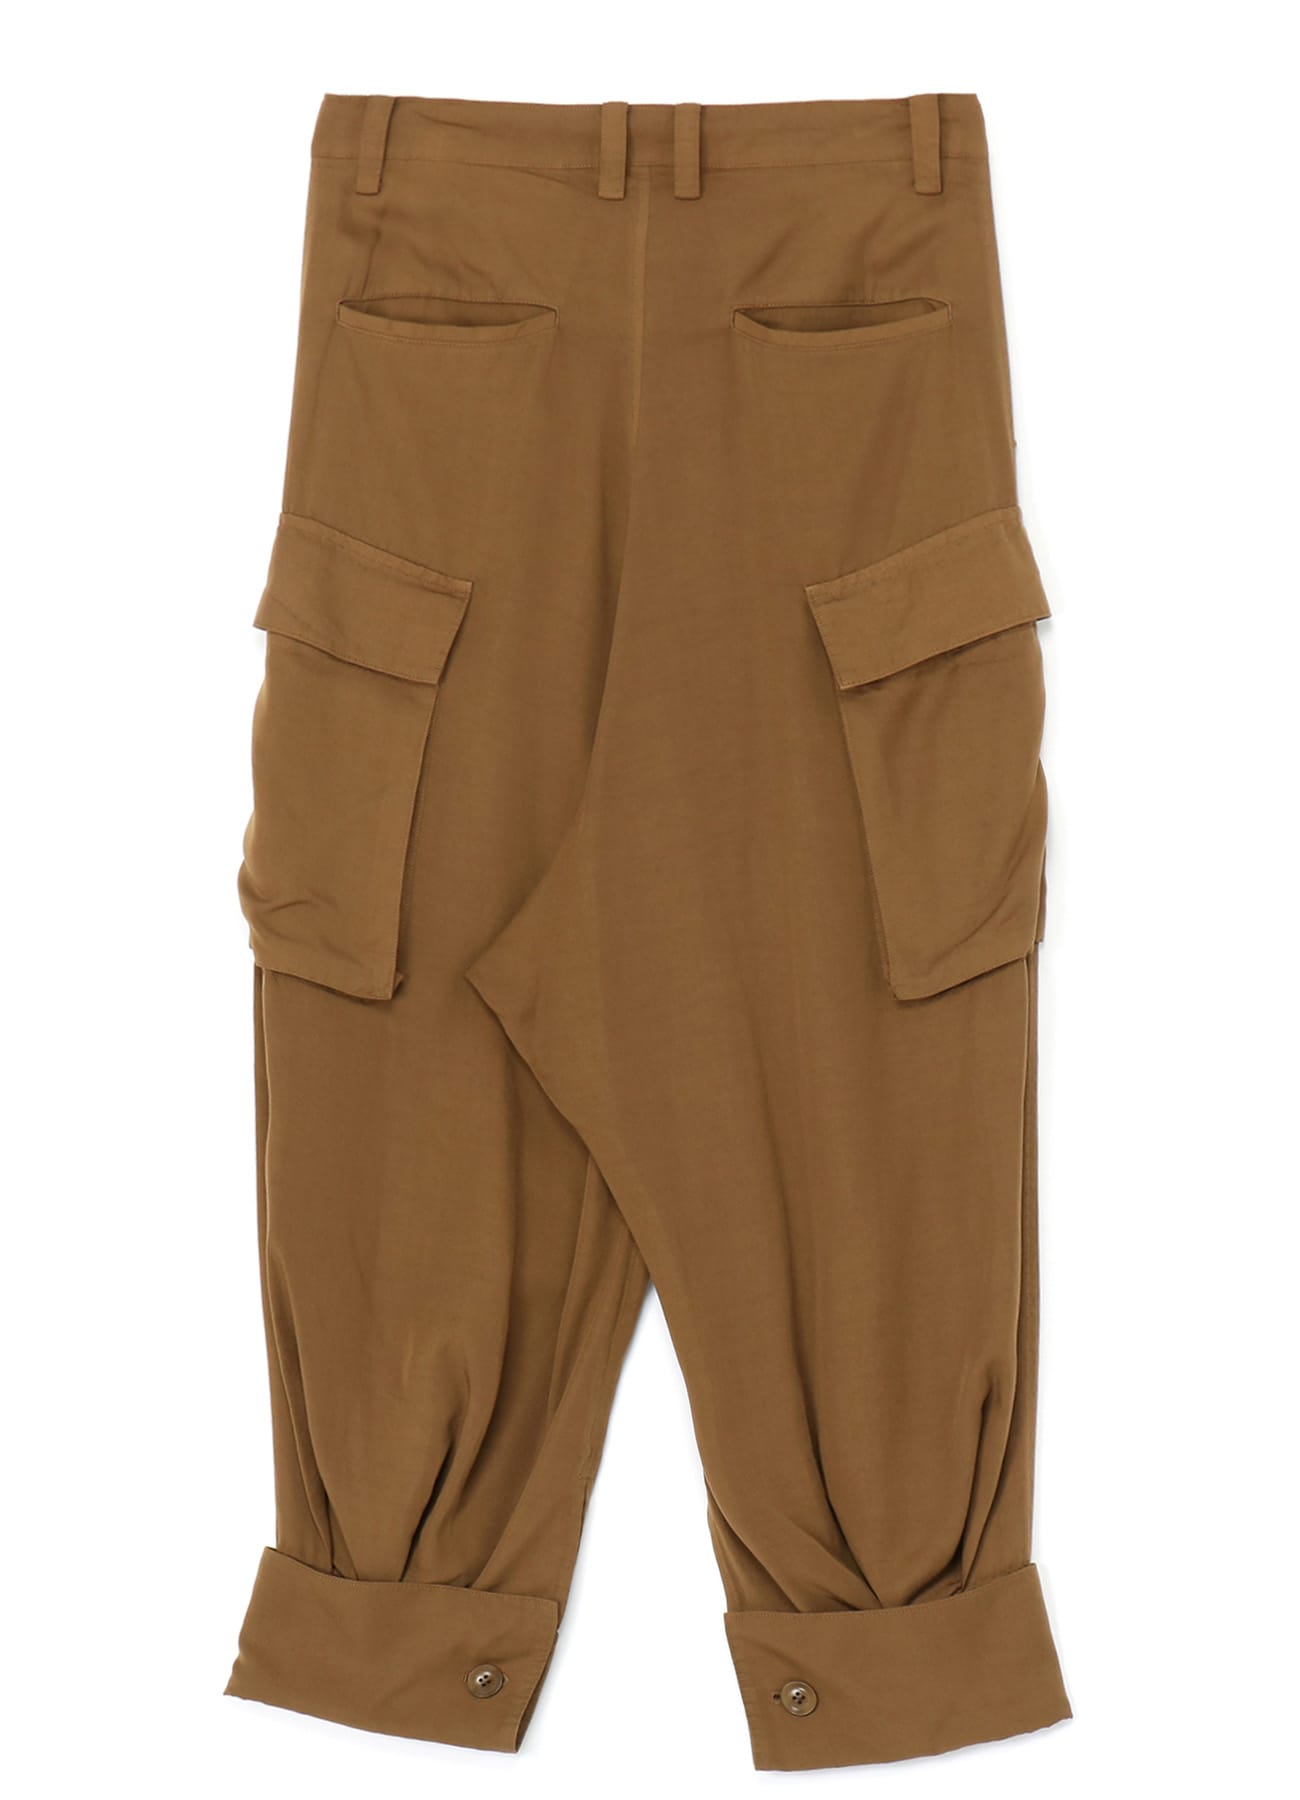 Retro Pocket Shorts - Brown Twill